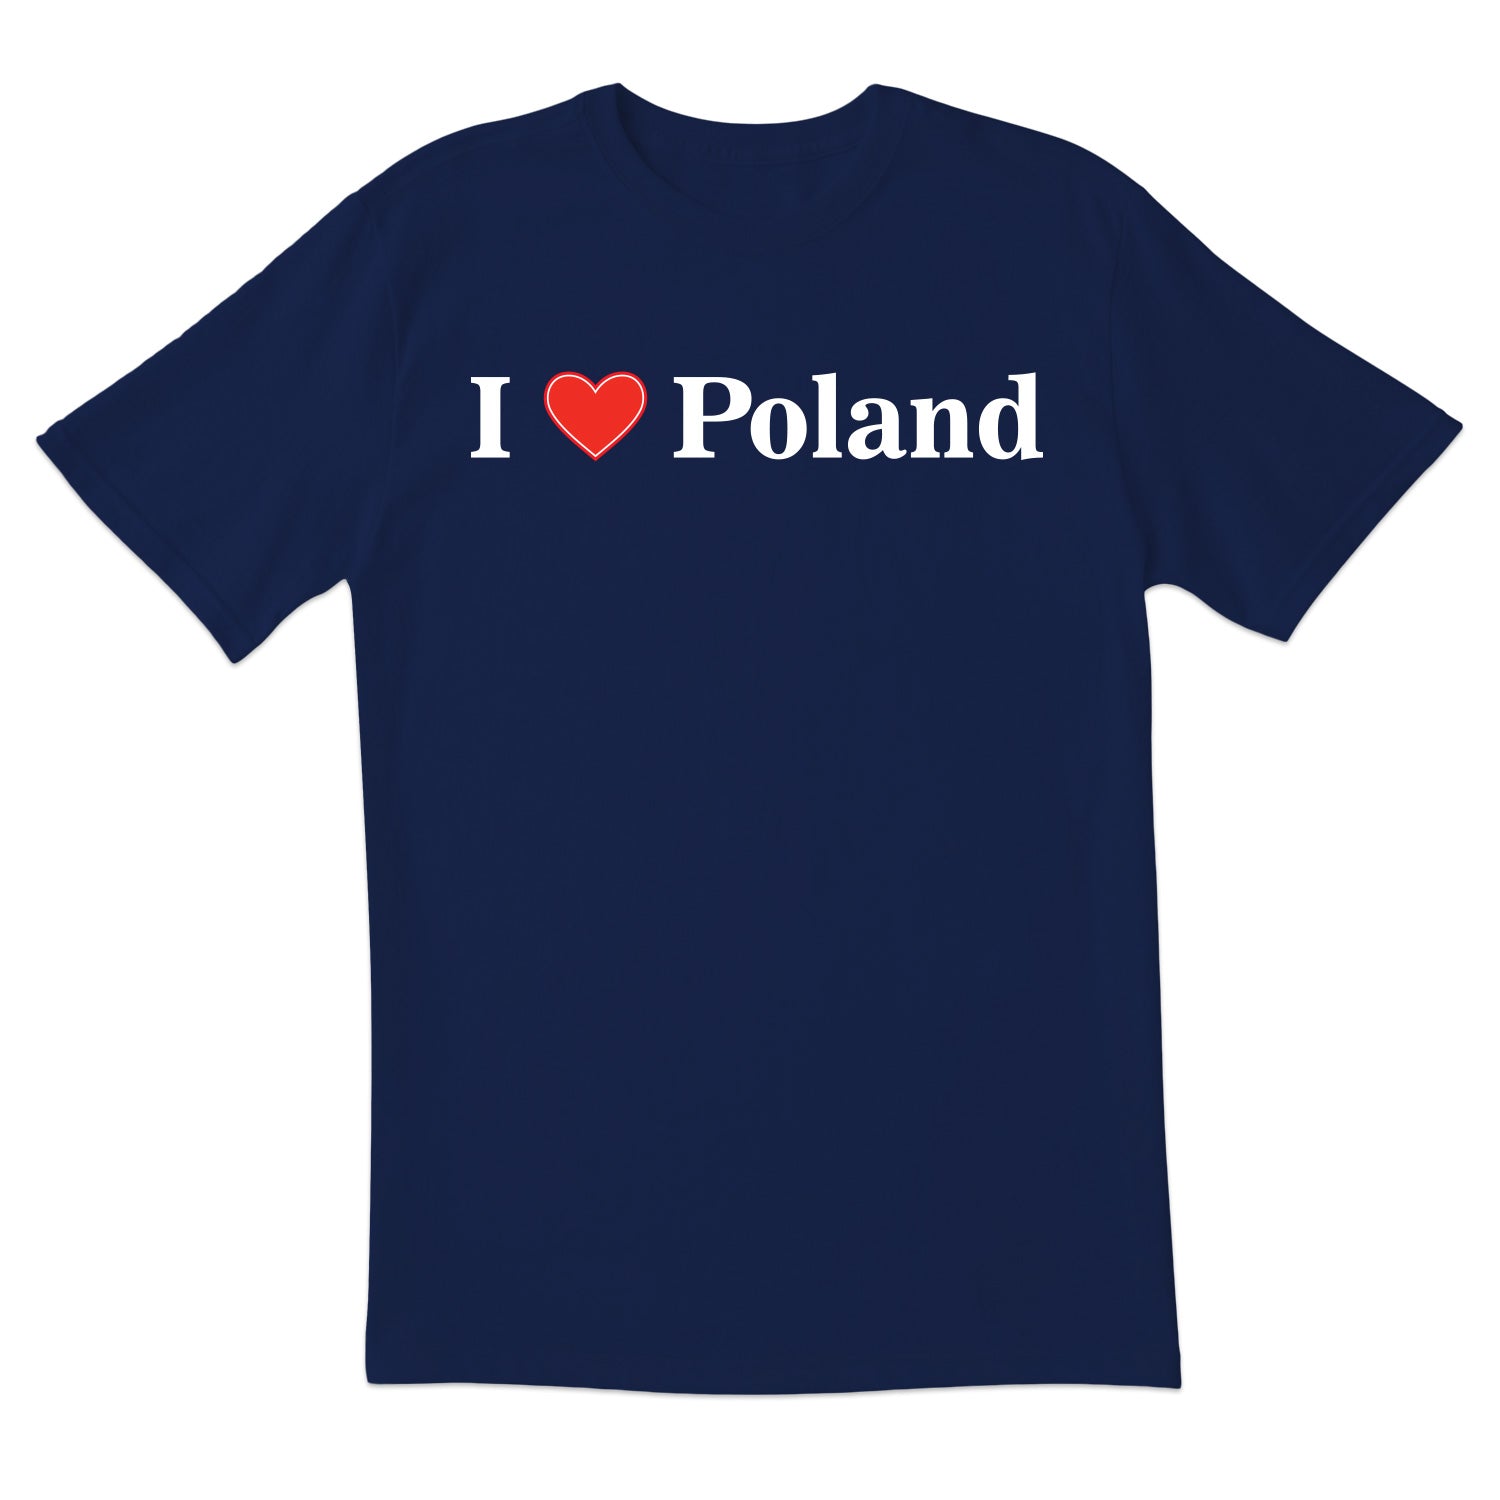 I Love Poland Short Sleeve Tshirt